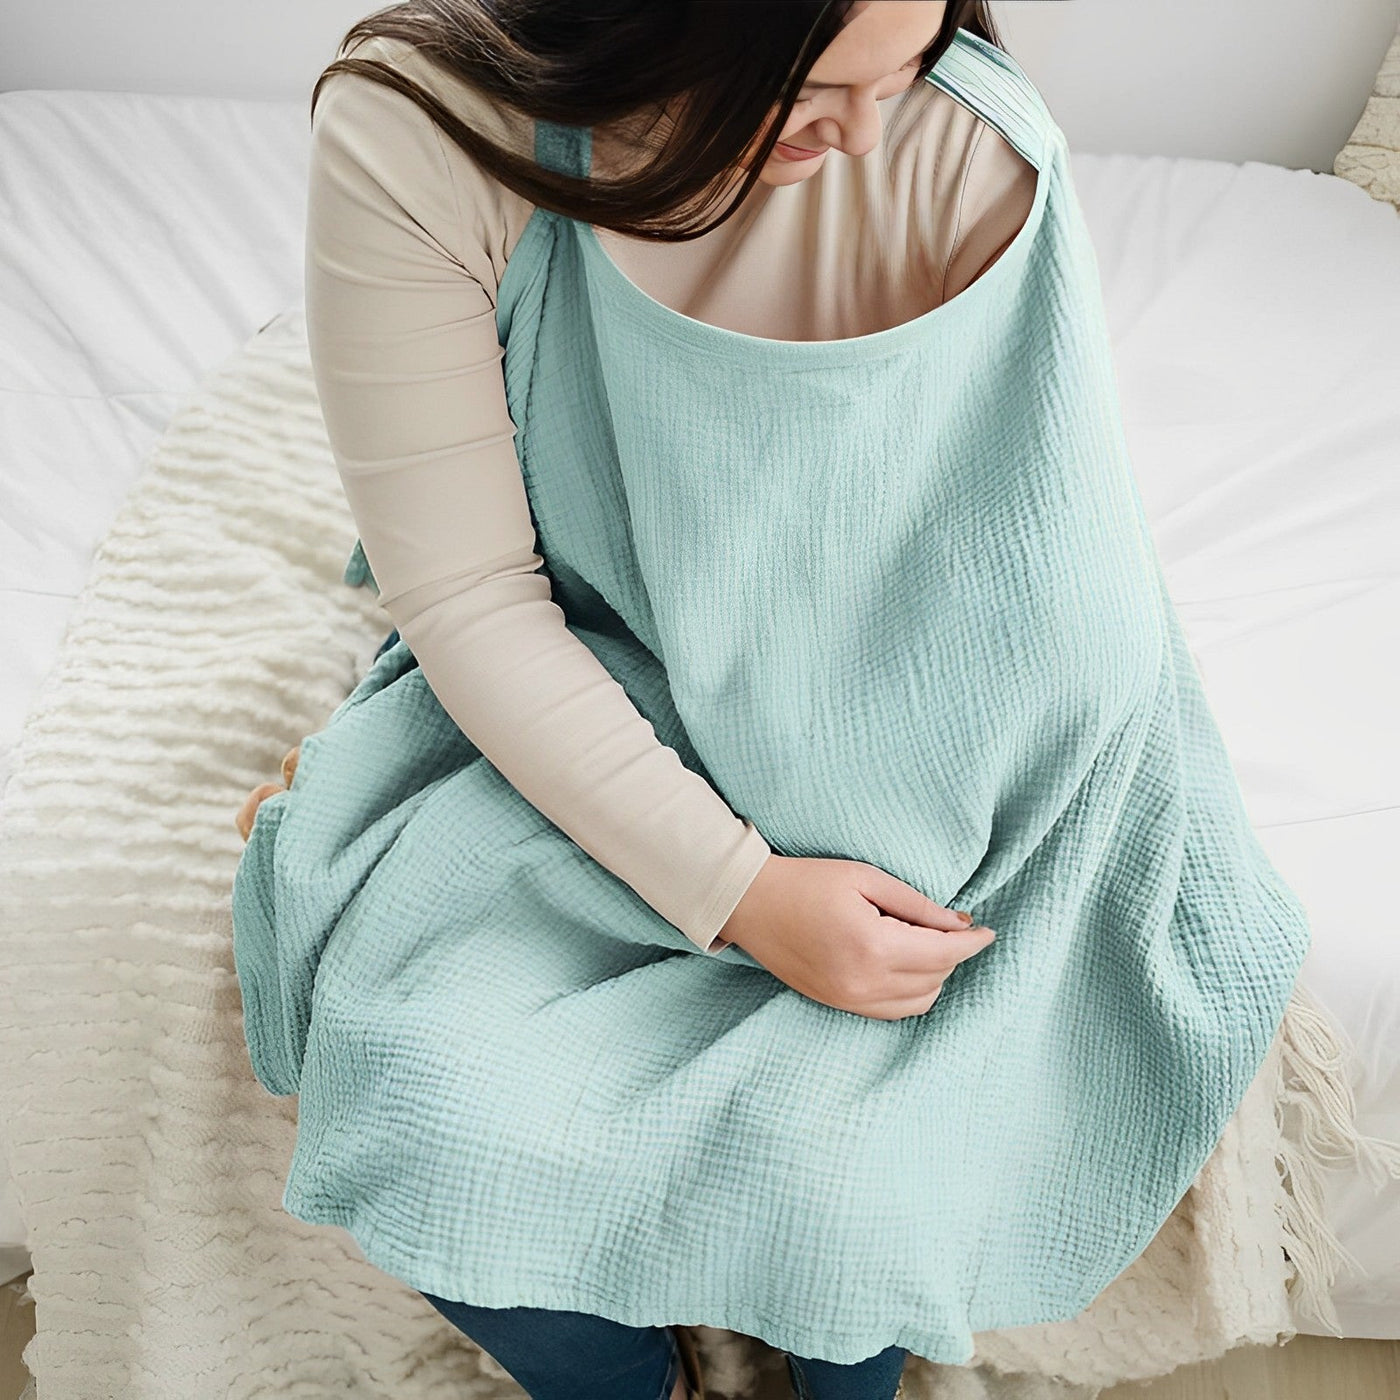 Comfortable Cotton Nursing Cover - Hamod Baby